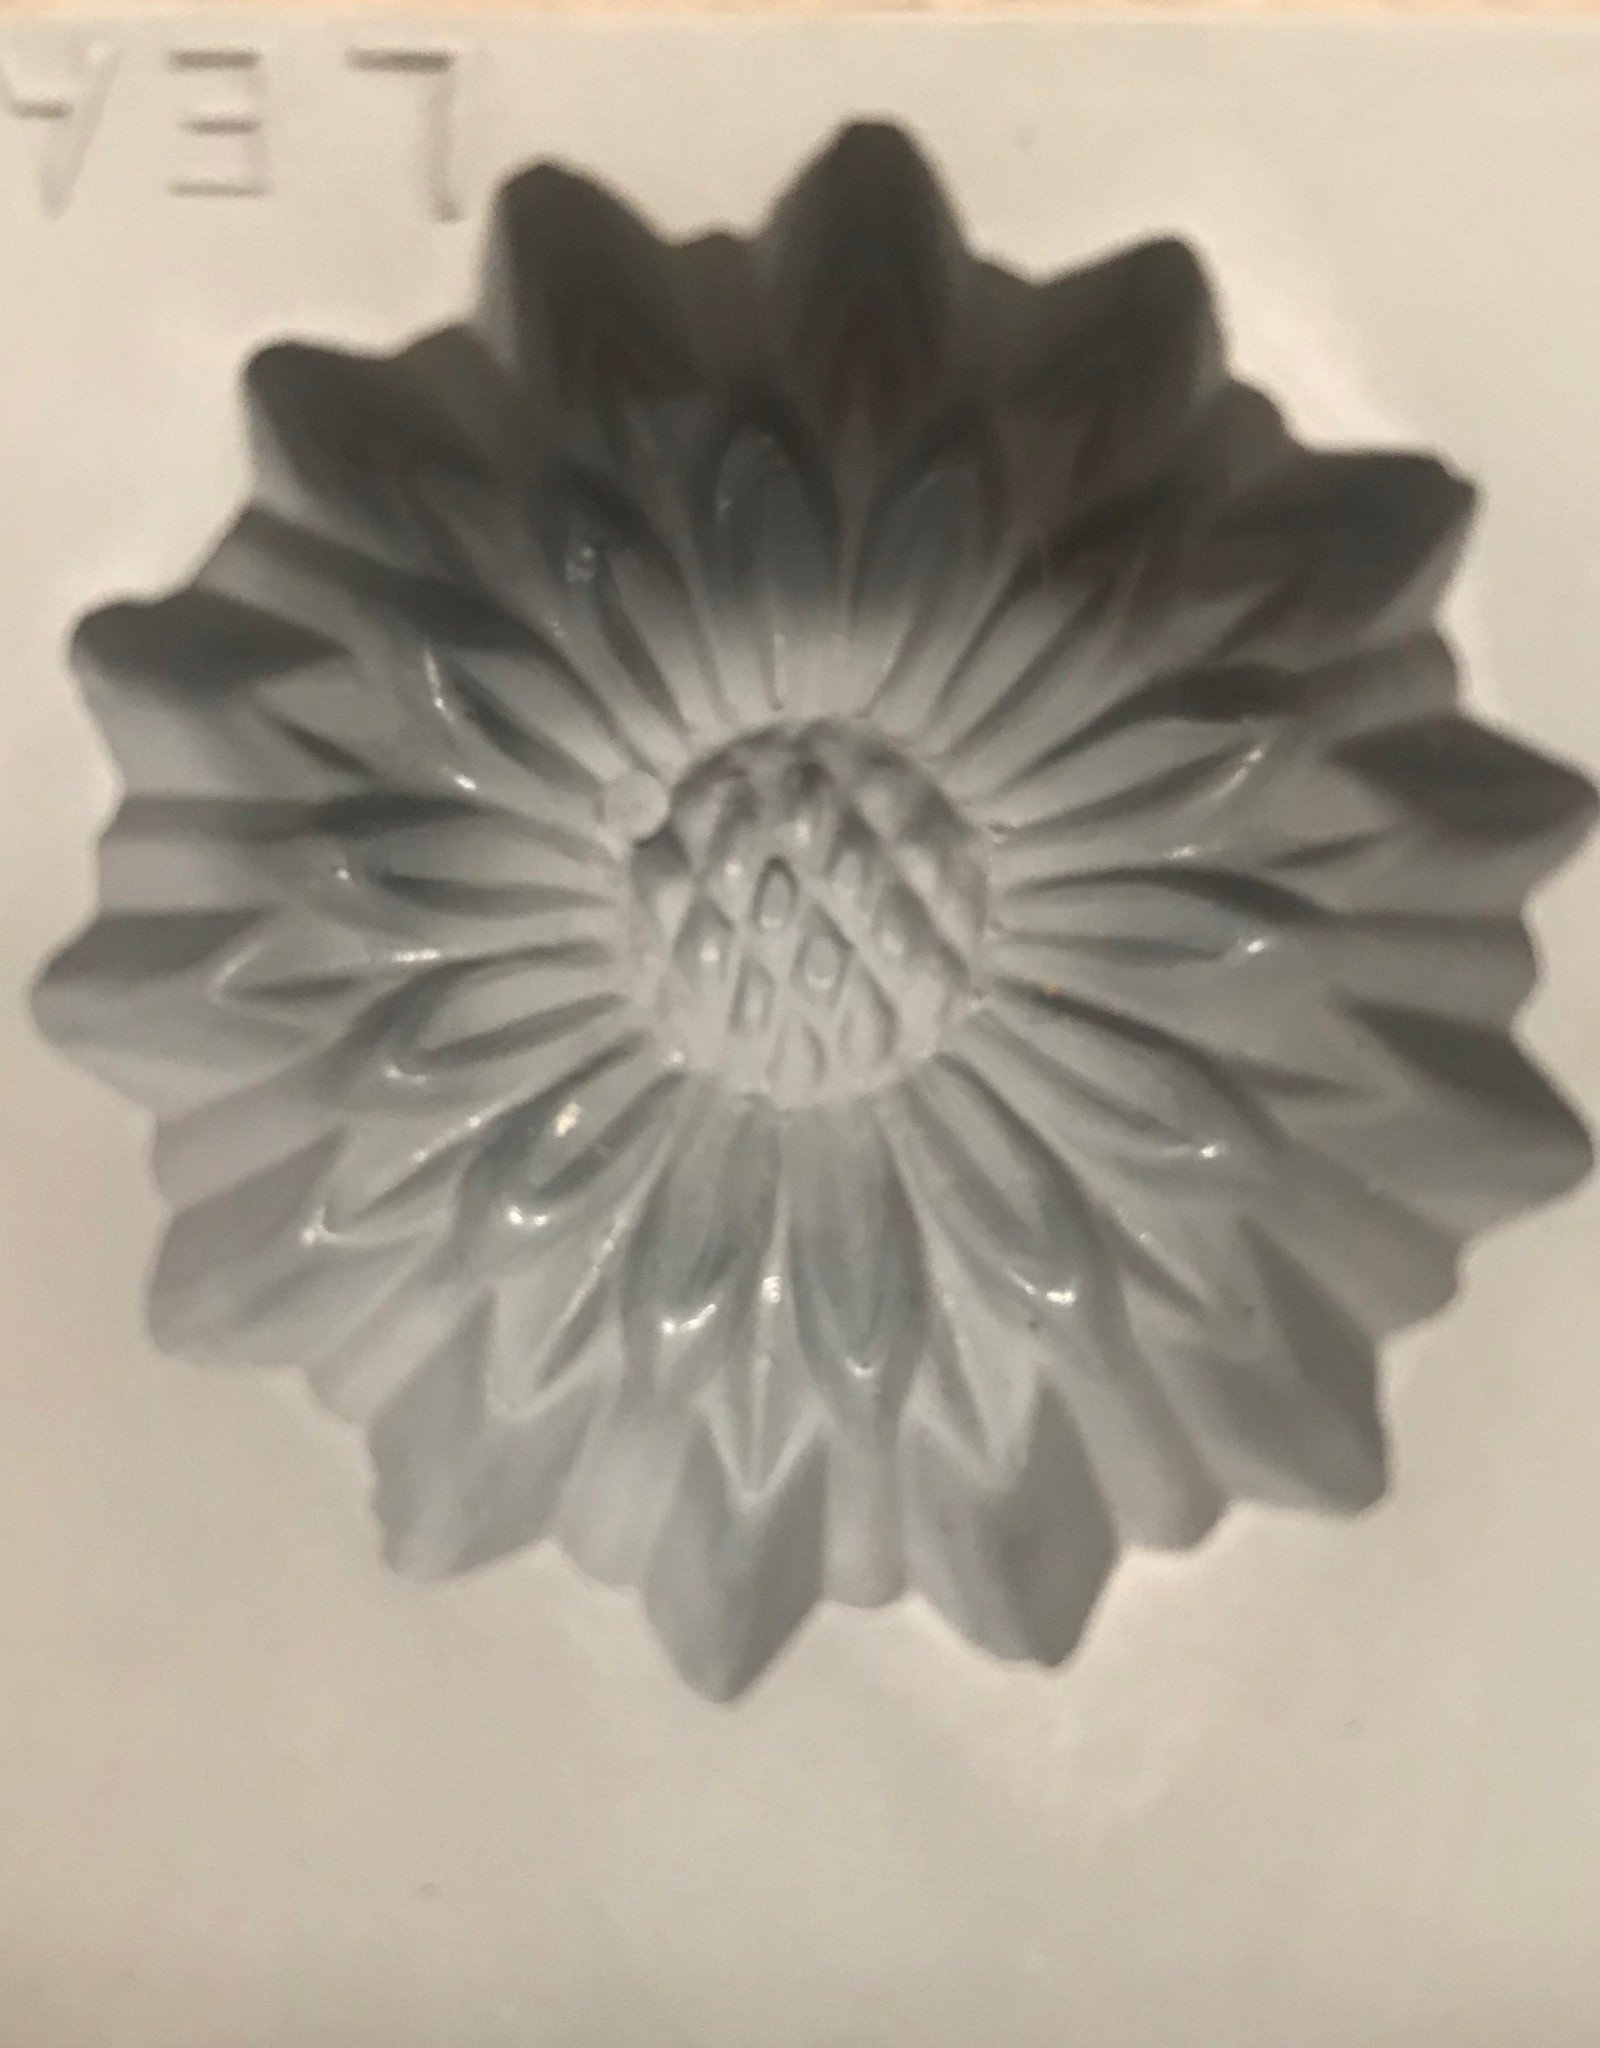 Daisy/Sunflower Mint Mold